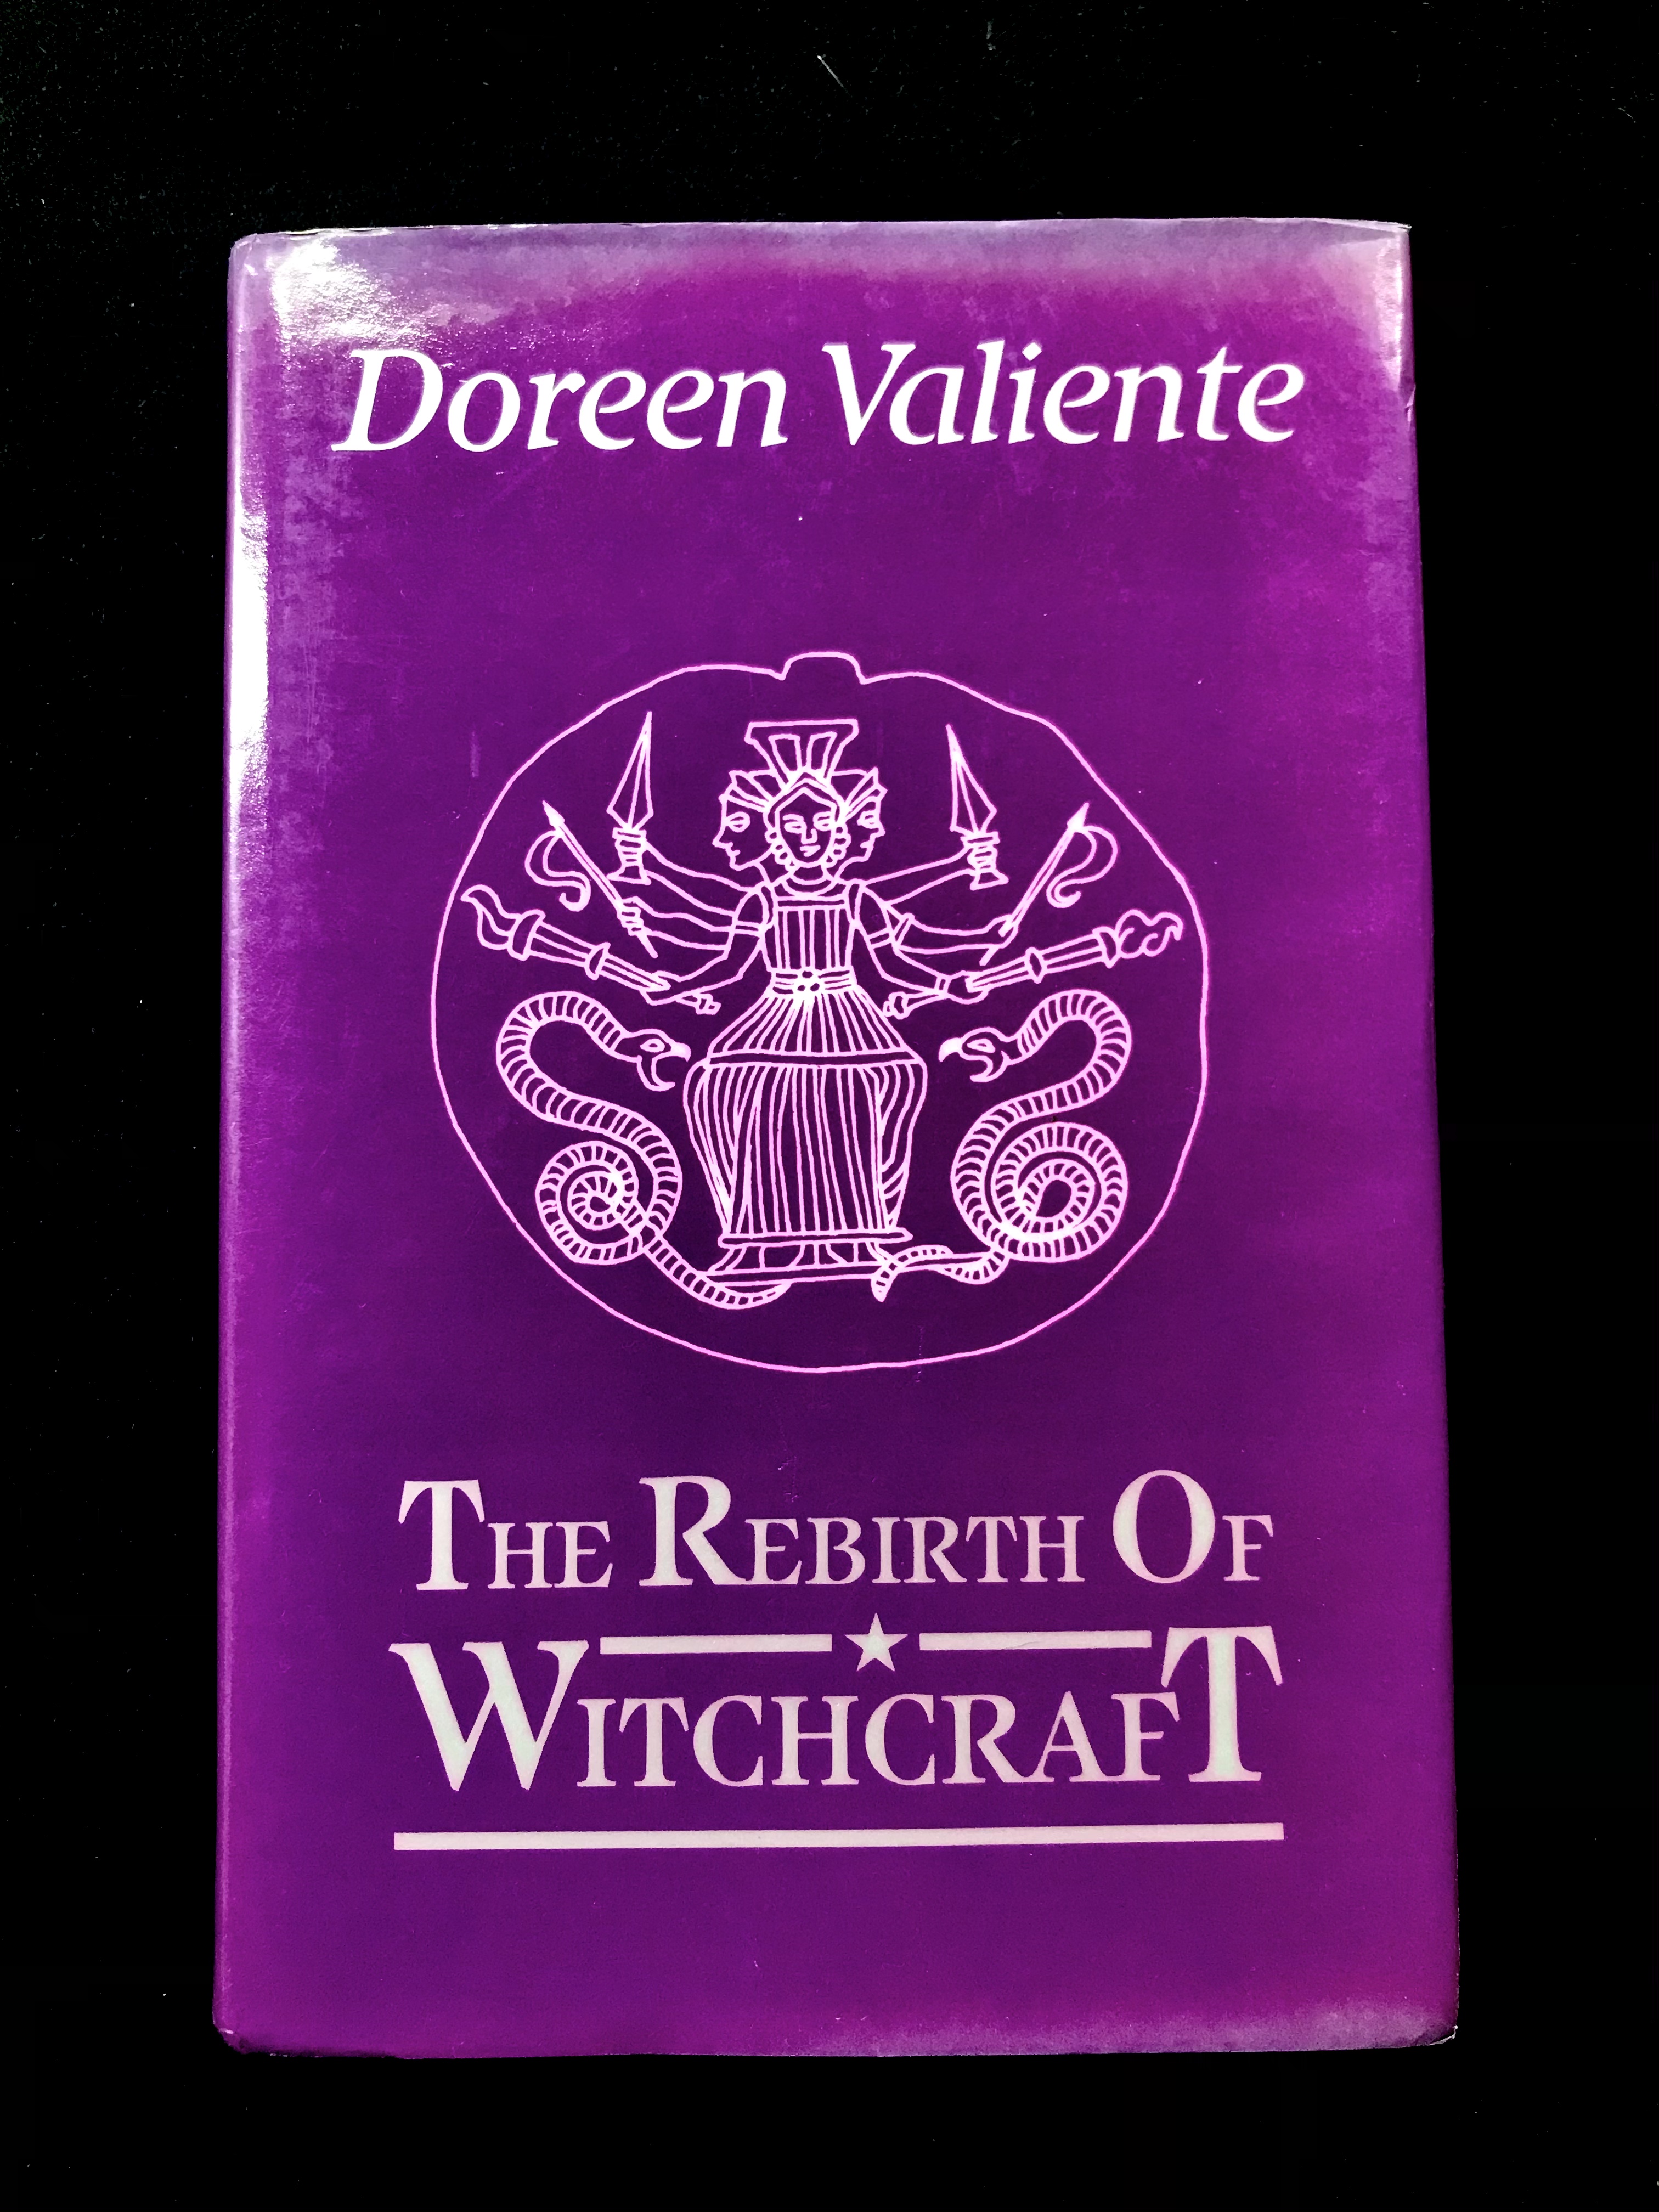 The Rebirth of Witchcraft by Doreen Valiente